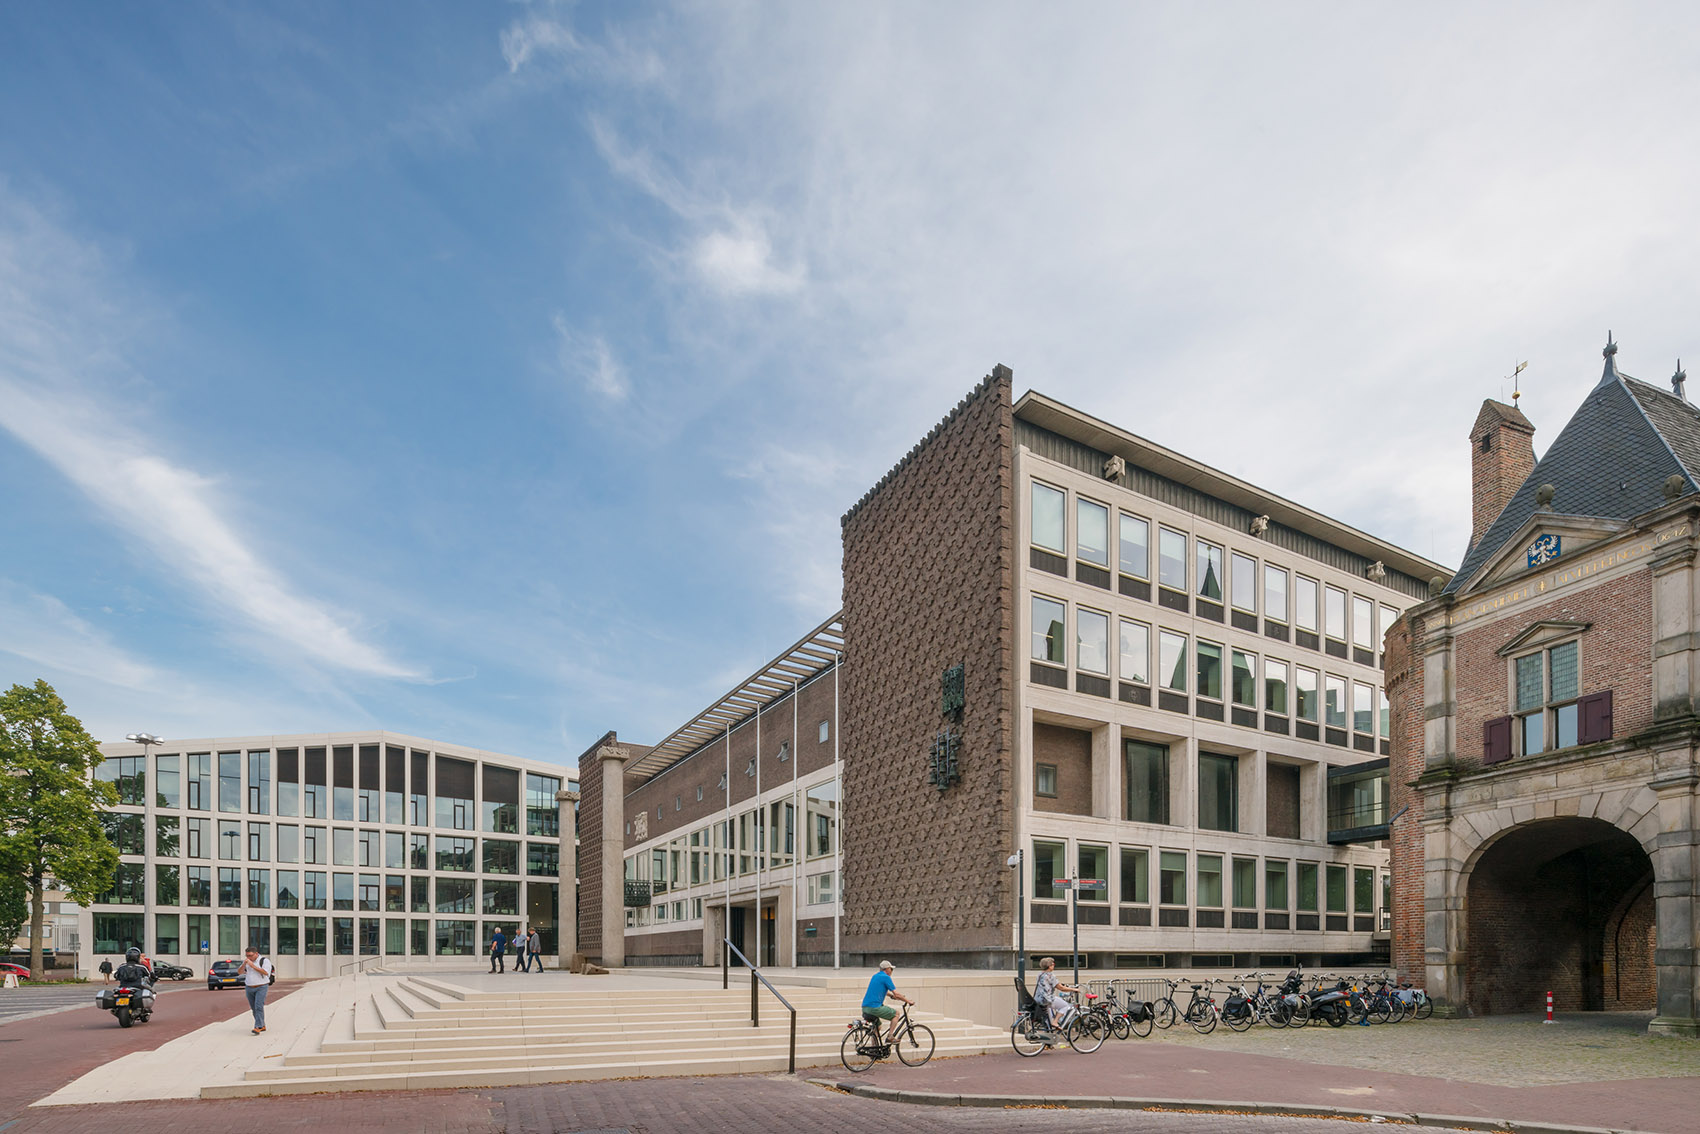 Gelderland省政厅，荷兰/新与旧，历史与创意、厚重与轻盈-59